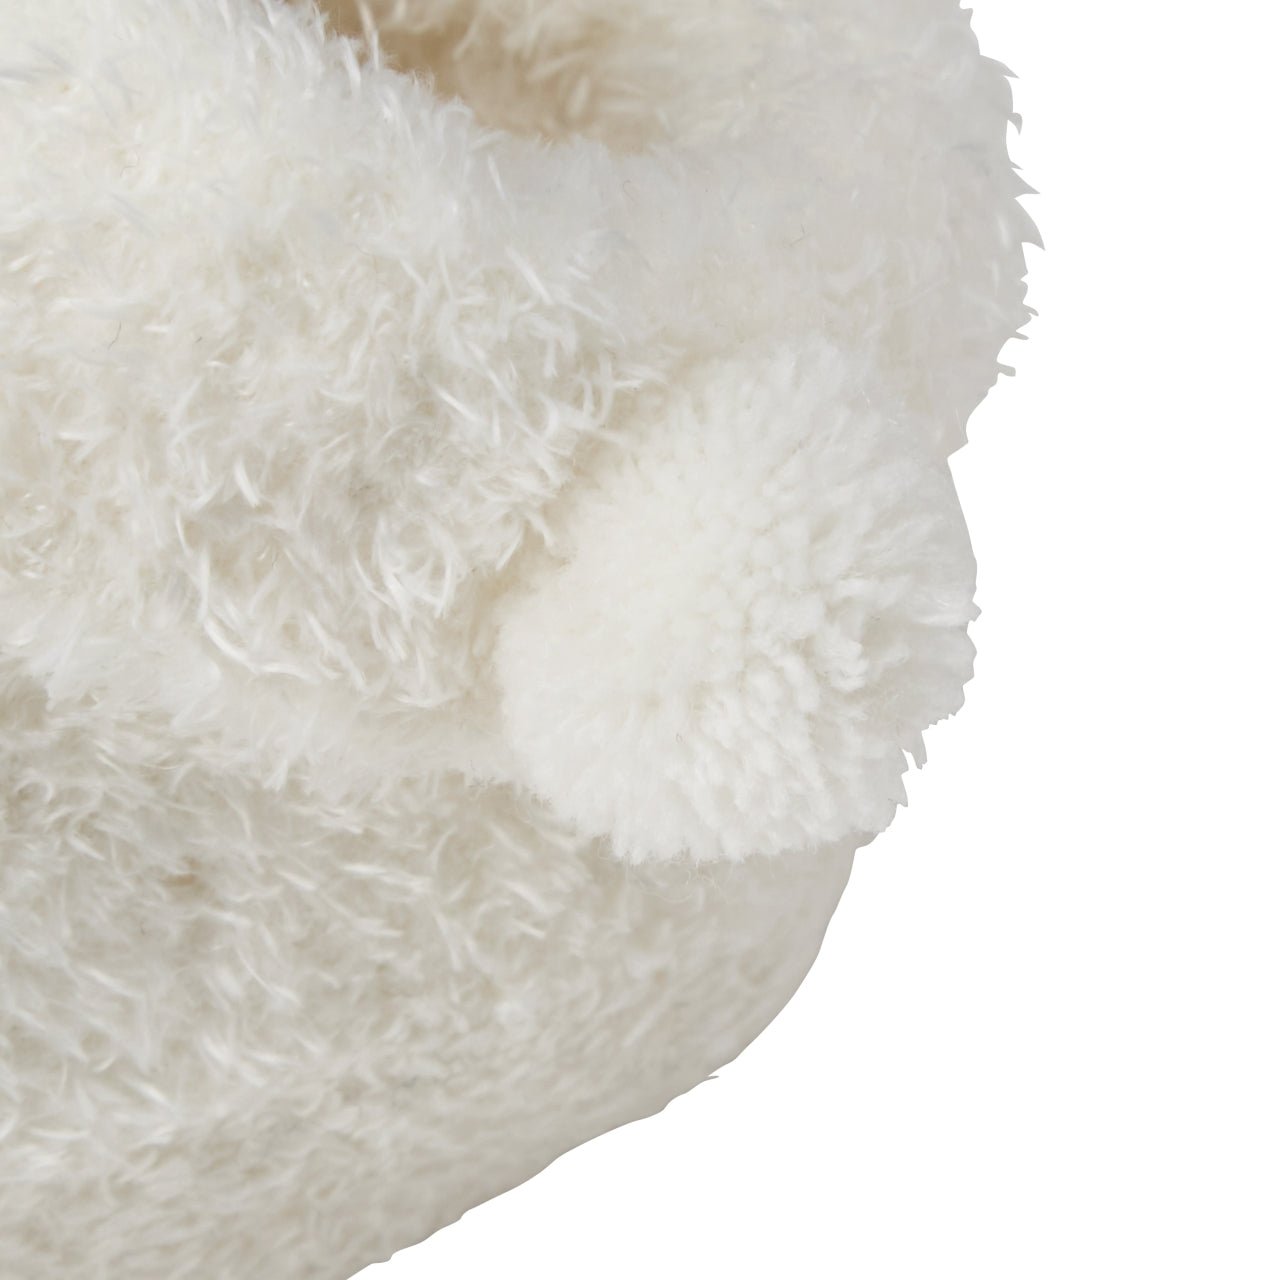 Fuzzy Fluffy Baby Socks - MIKI HOUSE USA